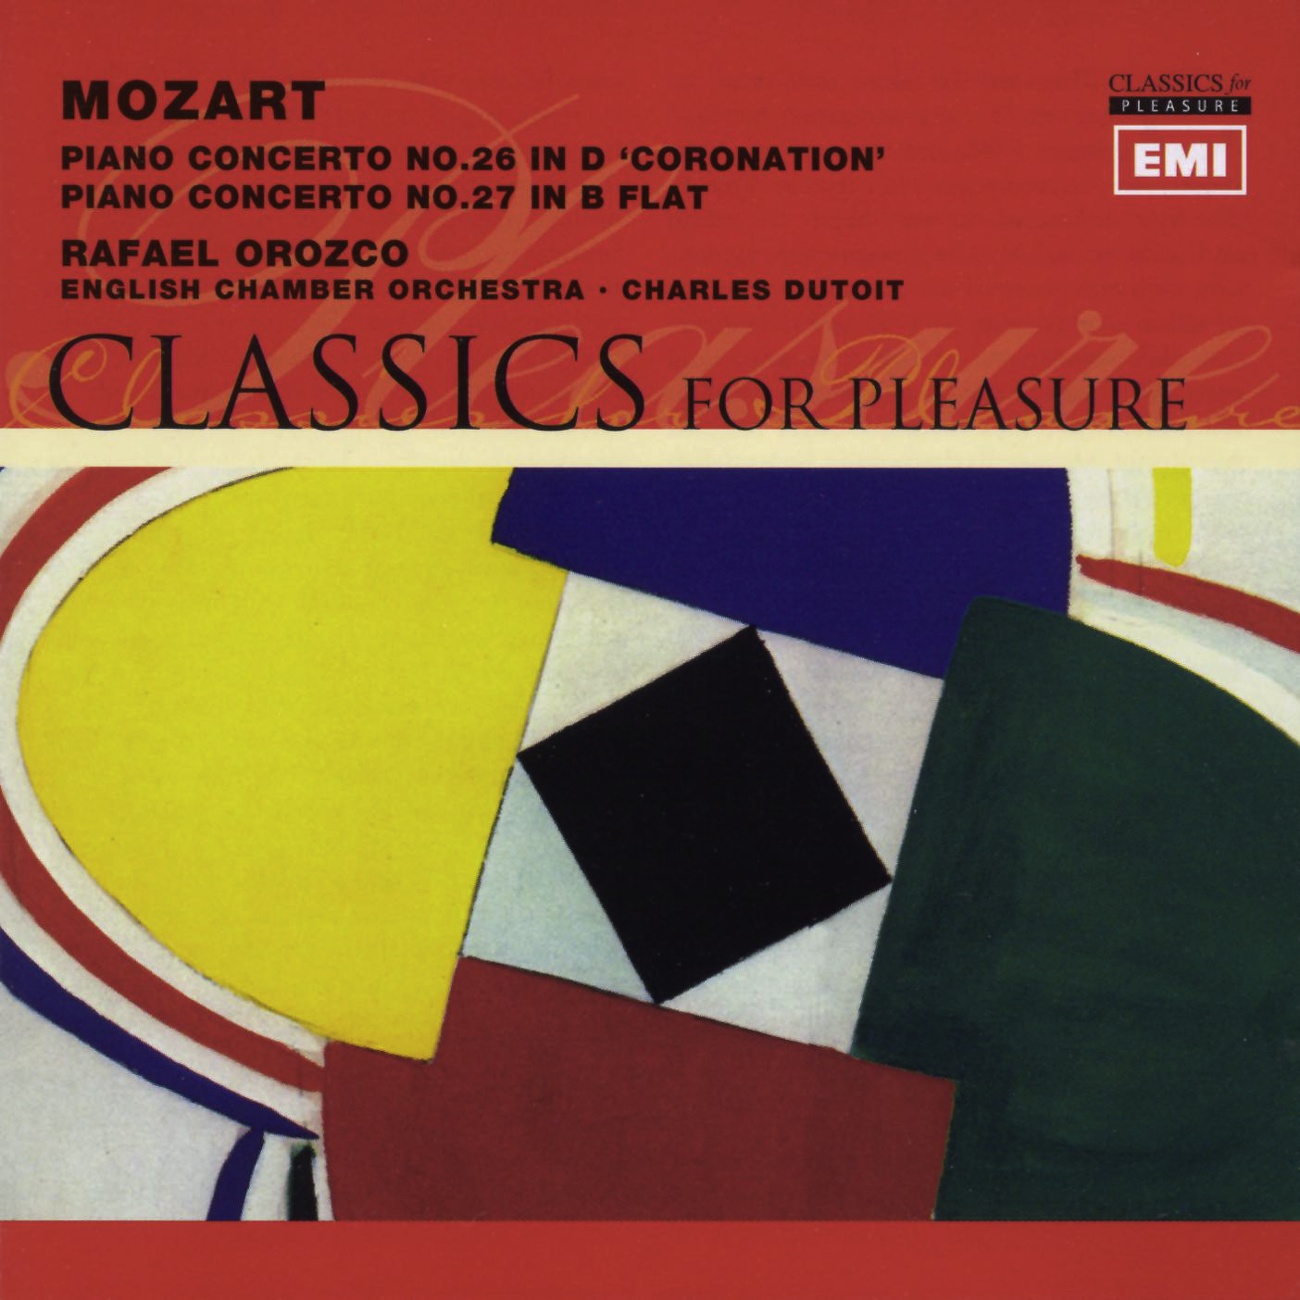 Mozart Piano Concertos Nos. 26 in D 'Coronation' & 27 in B flat